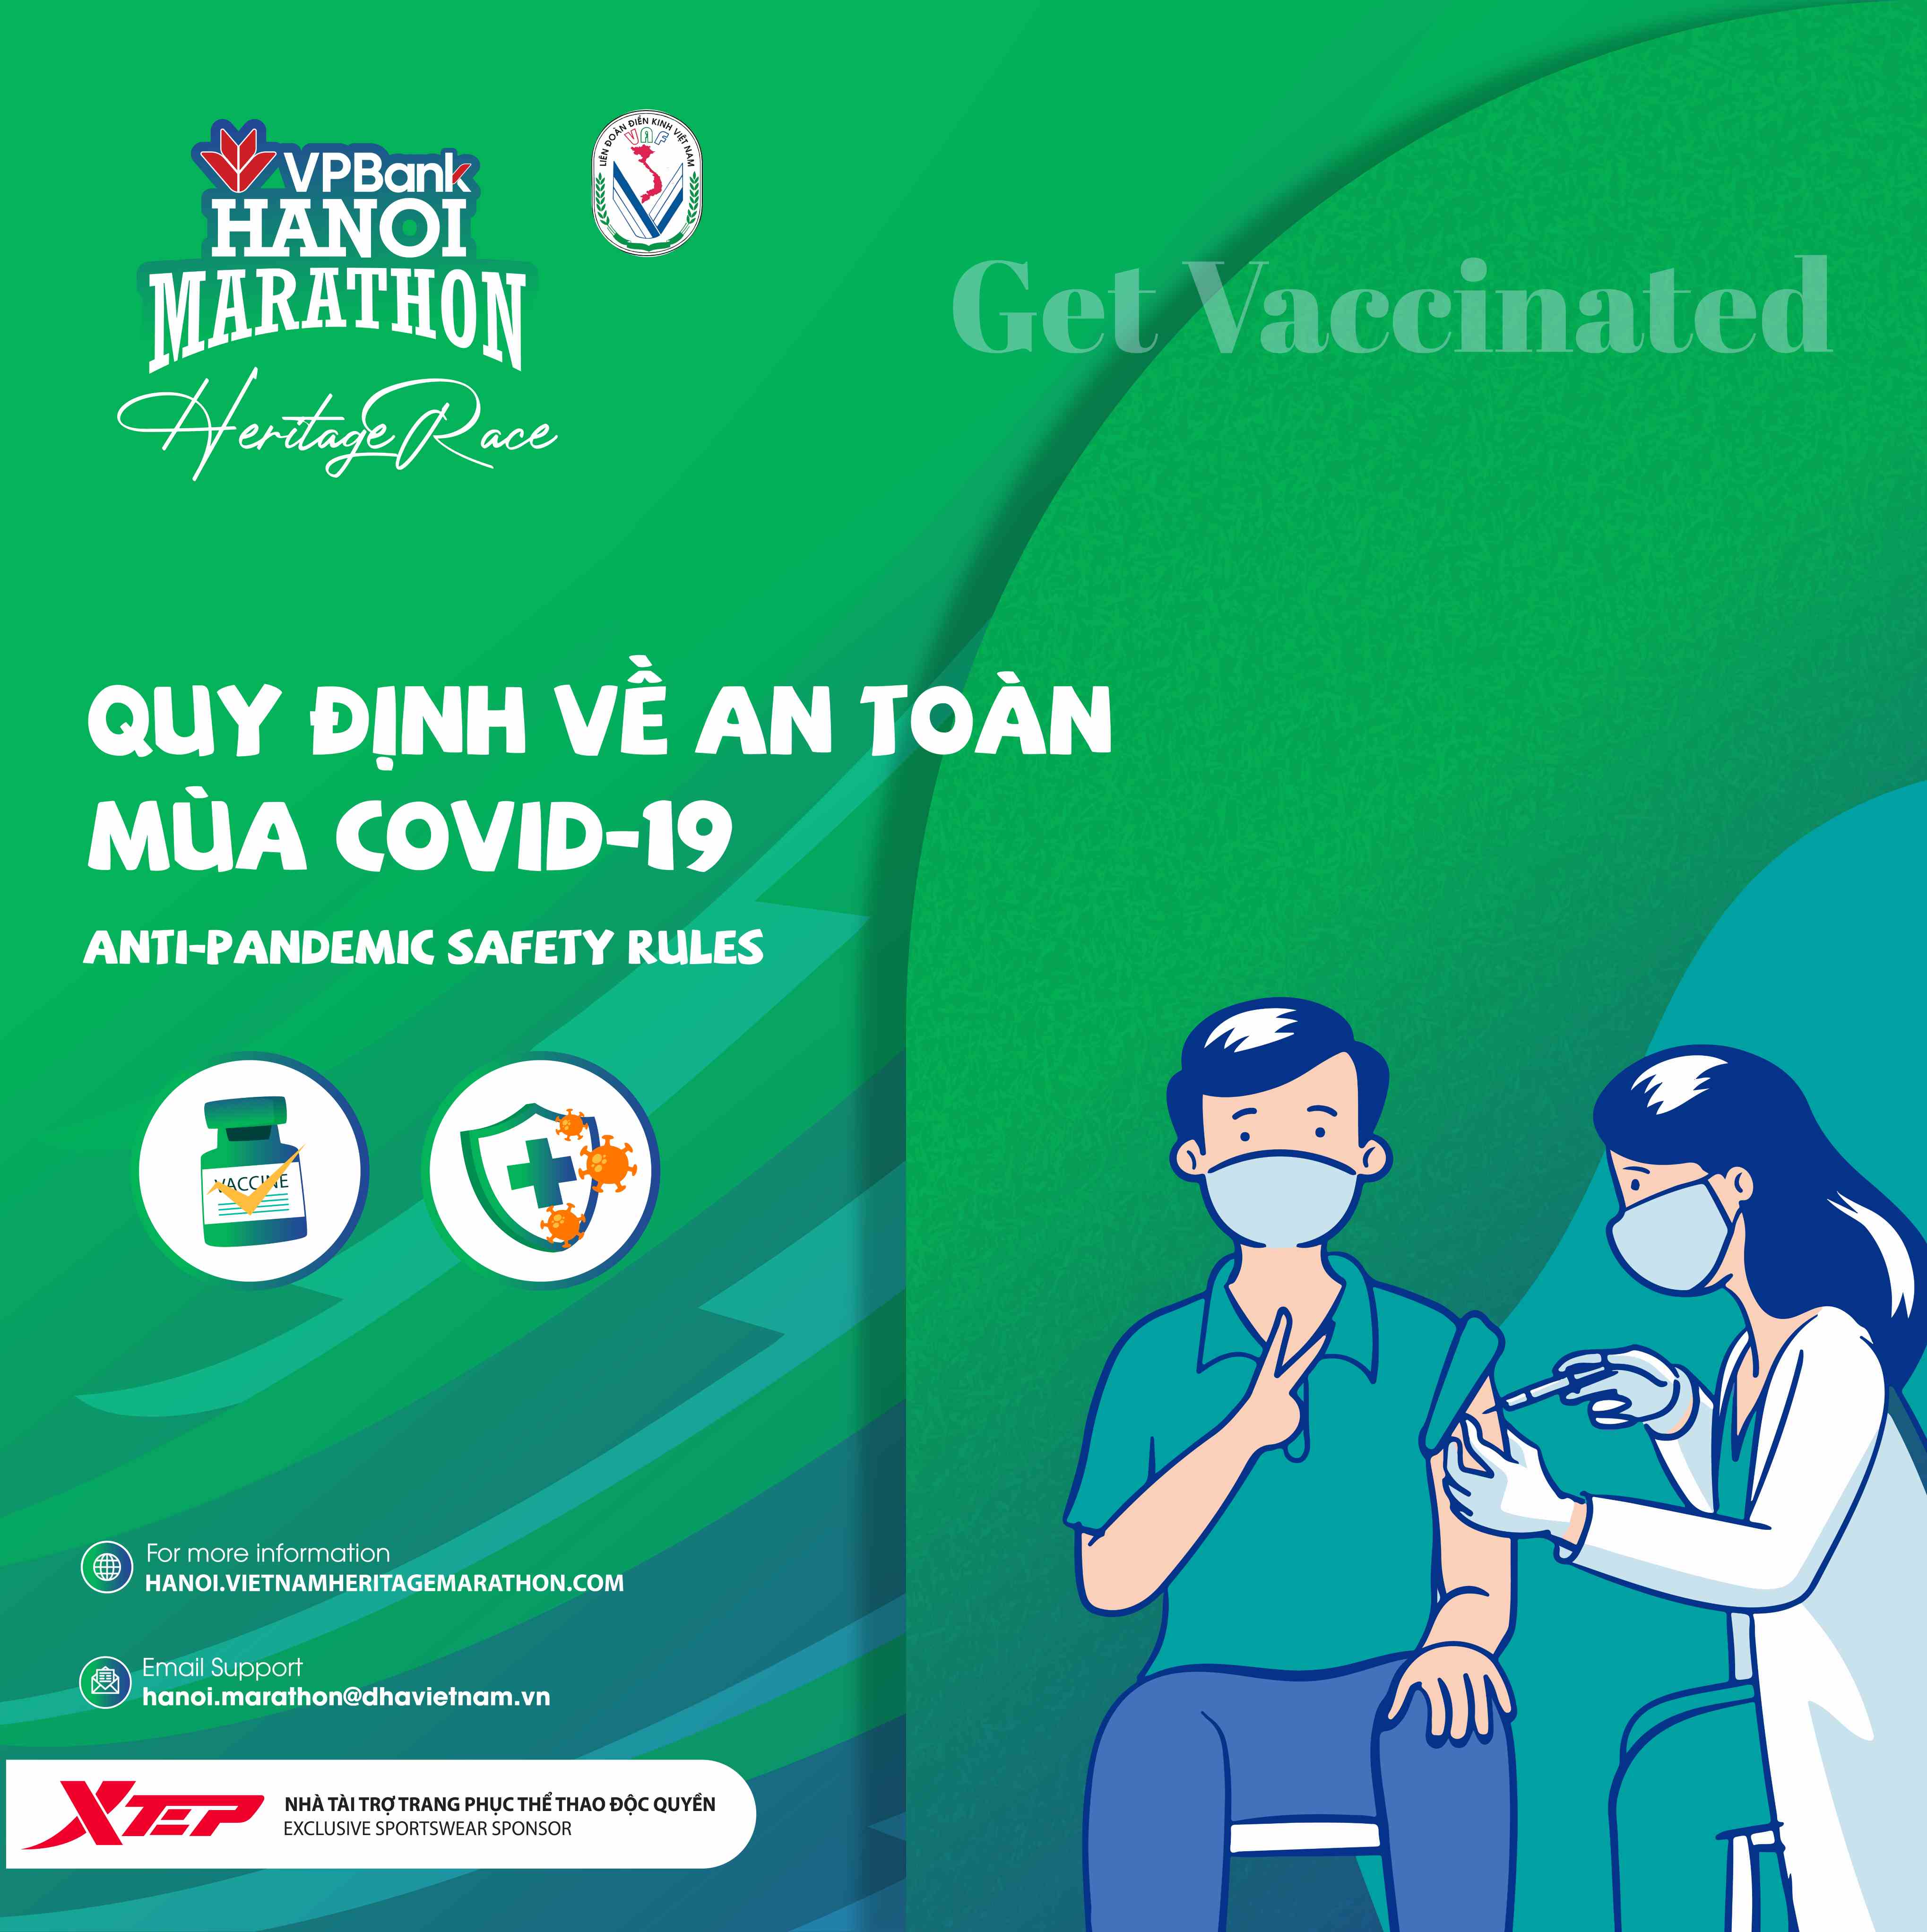 VPBank Hanoi Marathon: Anti-Pandemic Safety Rules